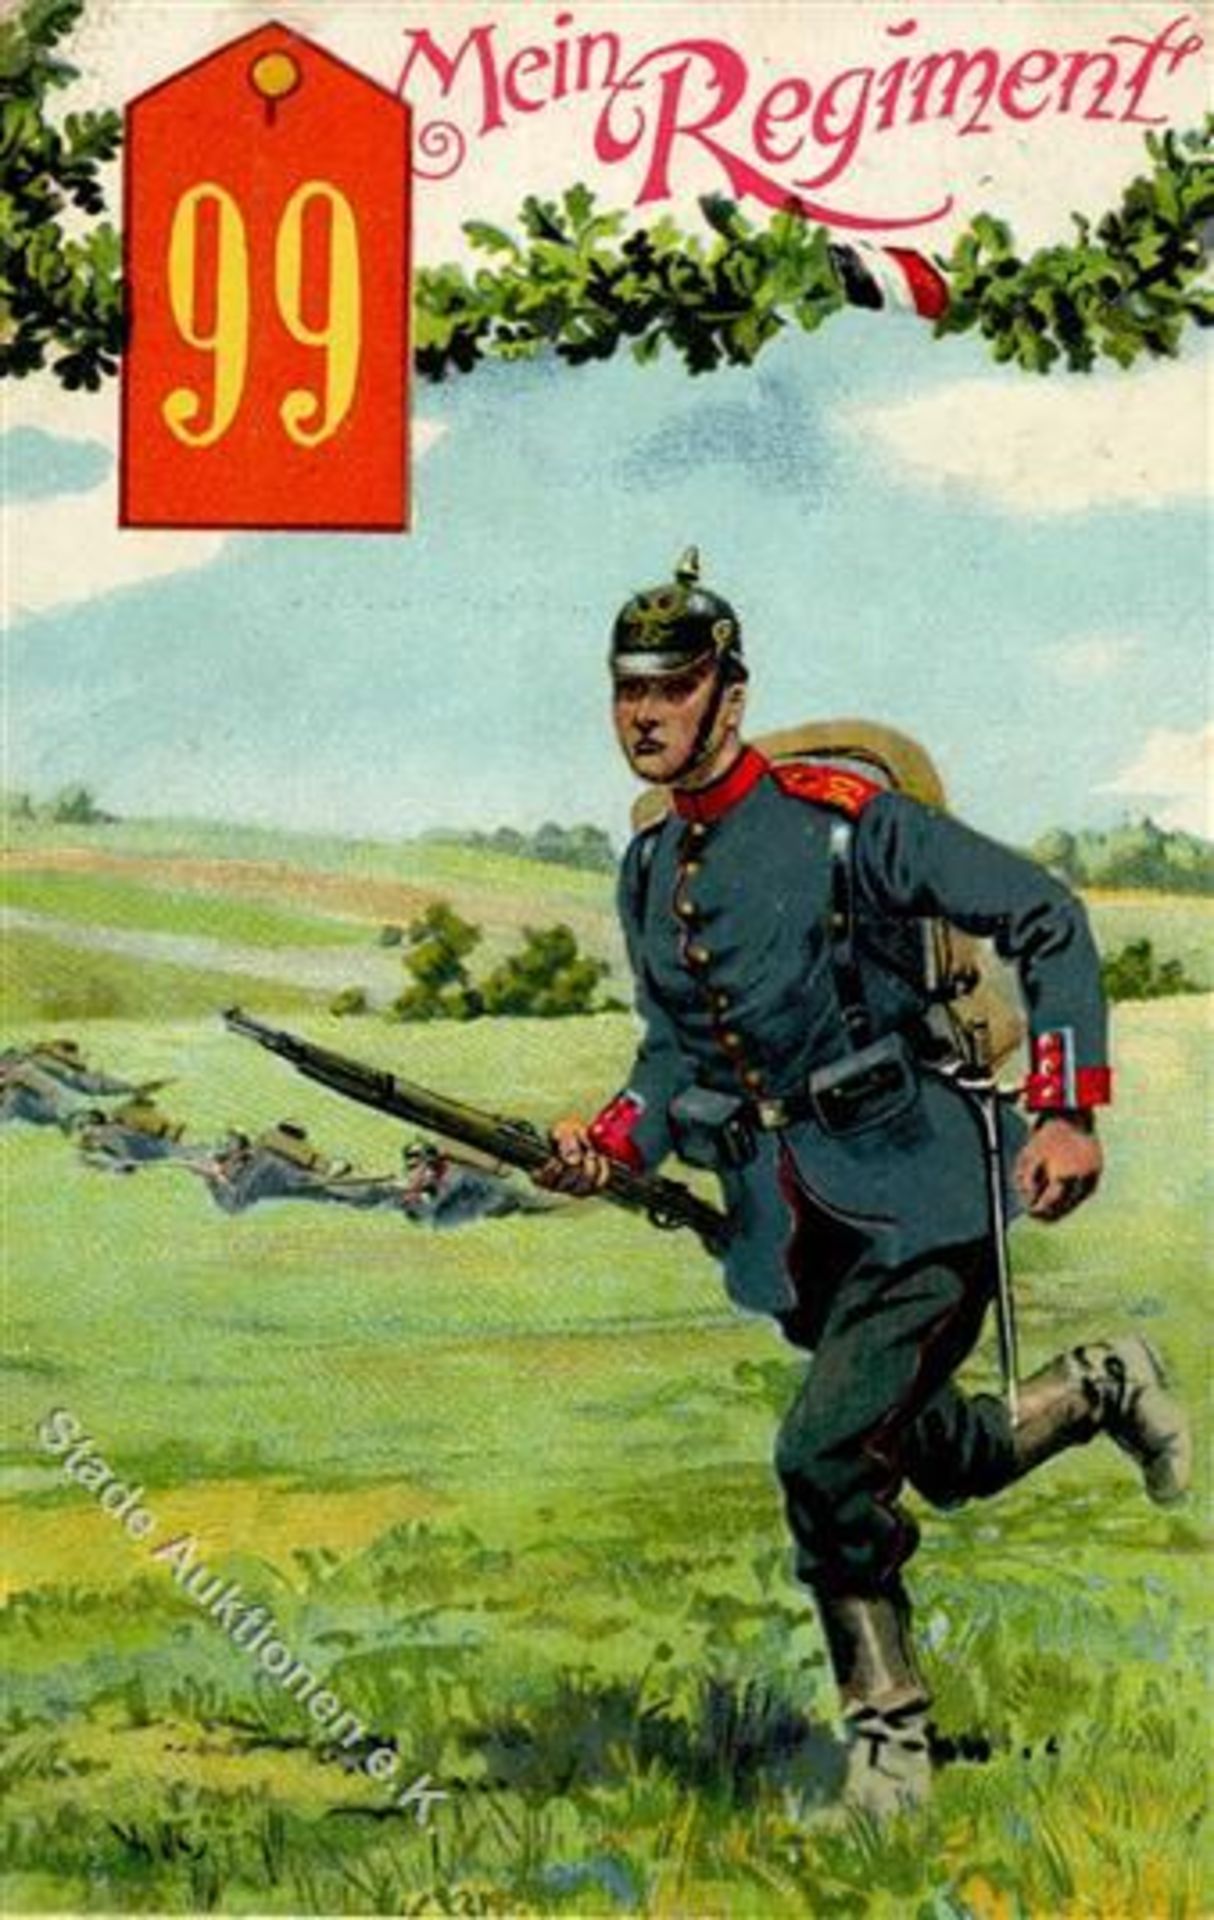 Militär, WK I, RegimenterRegiment Saverne (67700) Frankreich Nr. 99 Inft. Regt. 1913 I-IIDieses